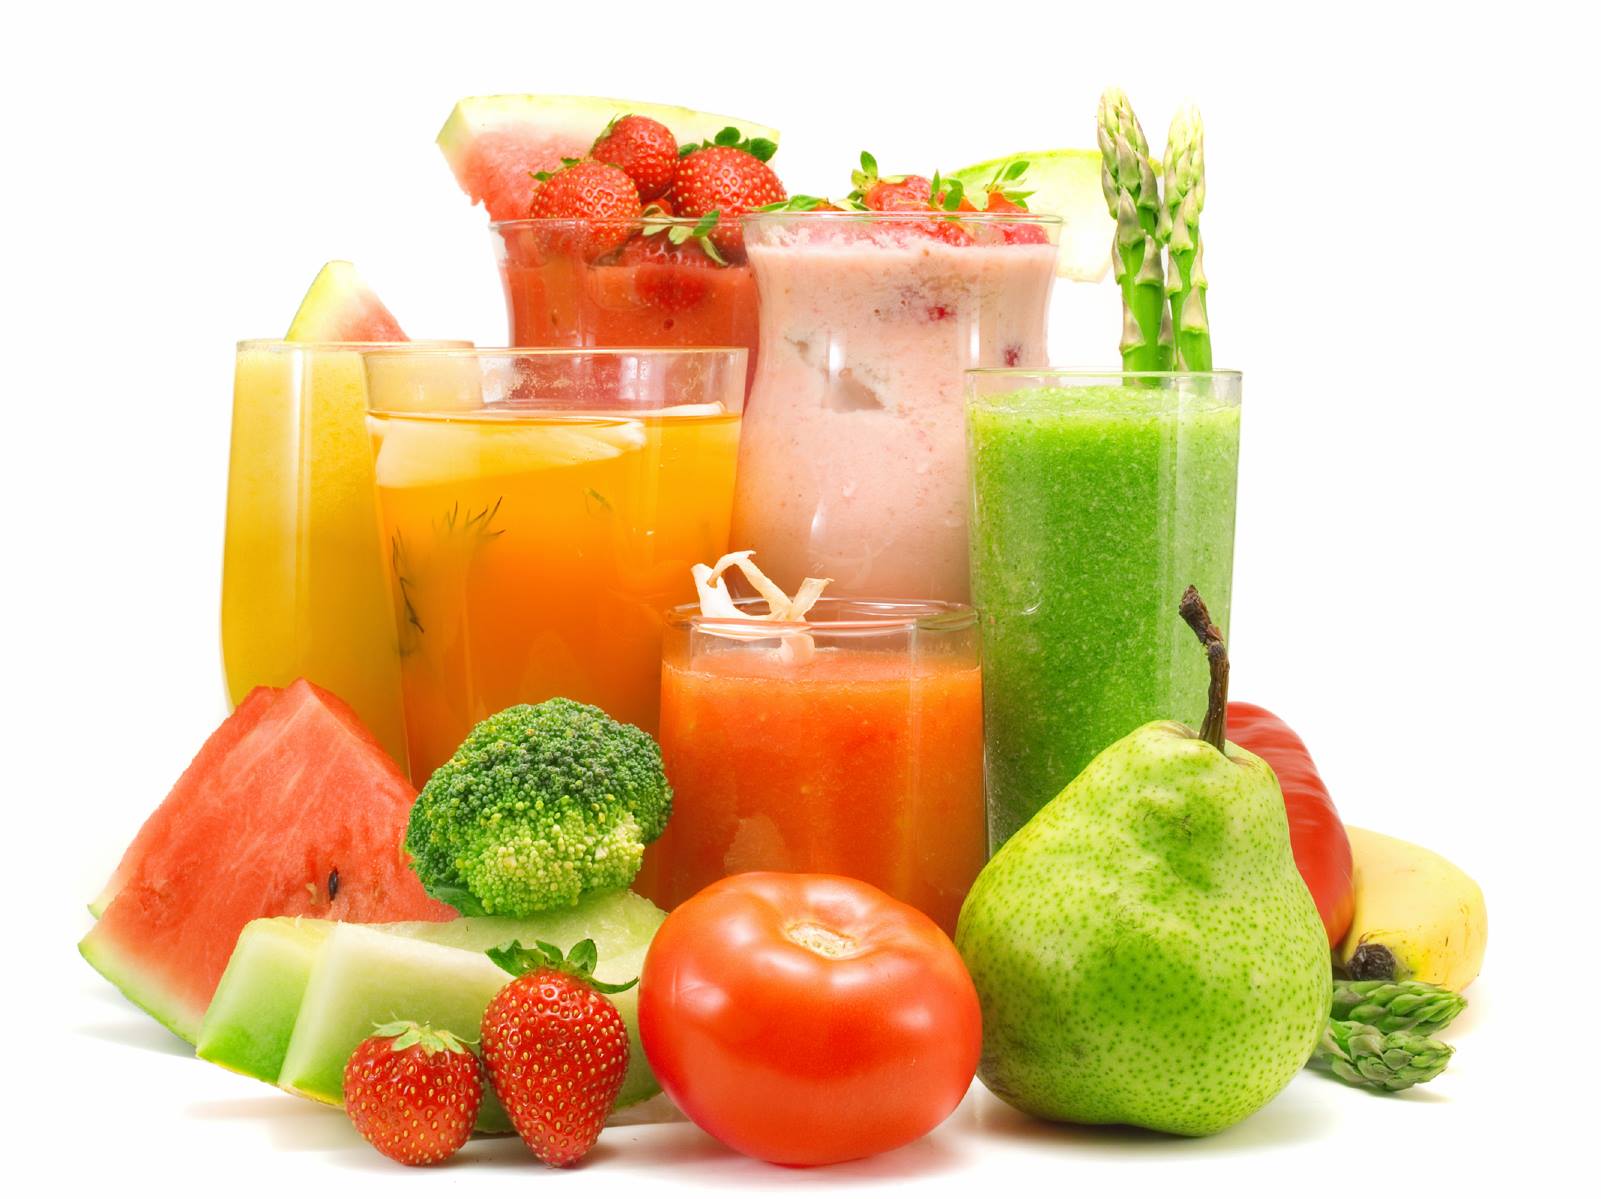 liquid diet foods